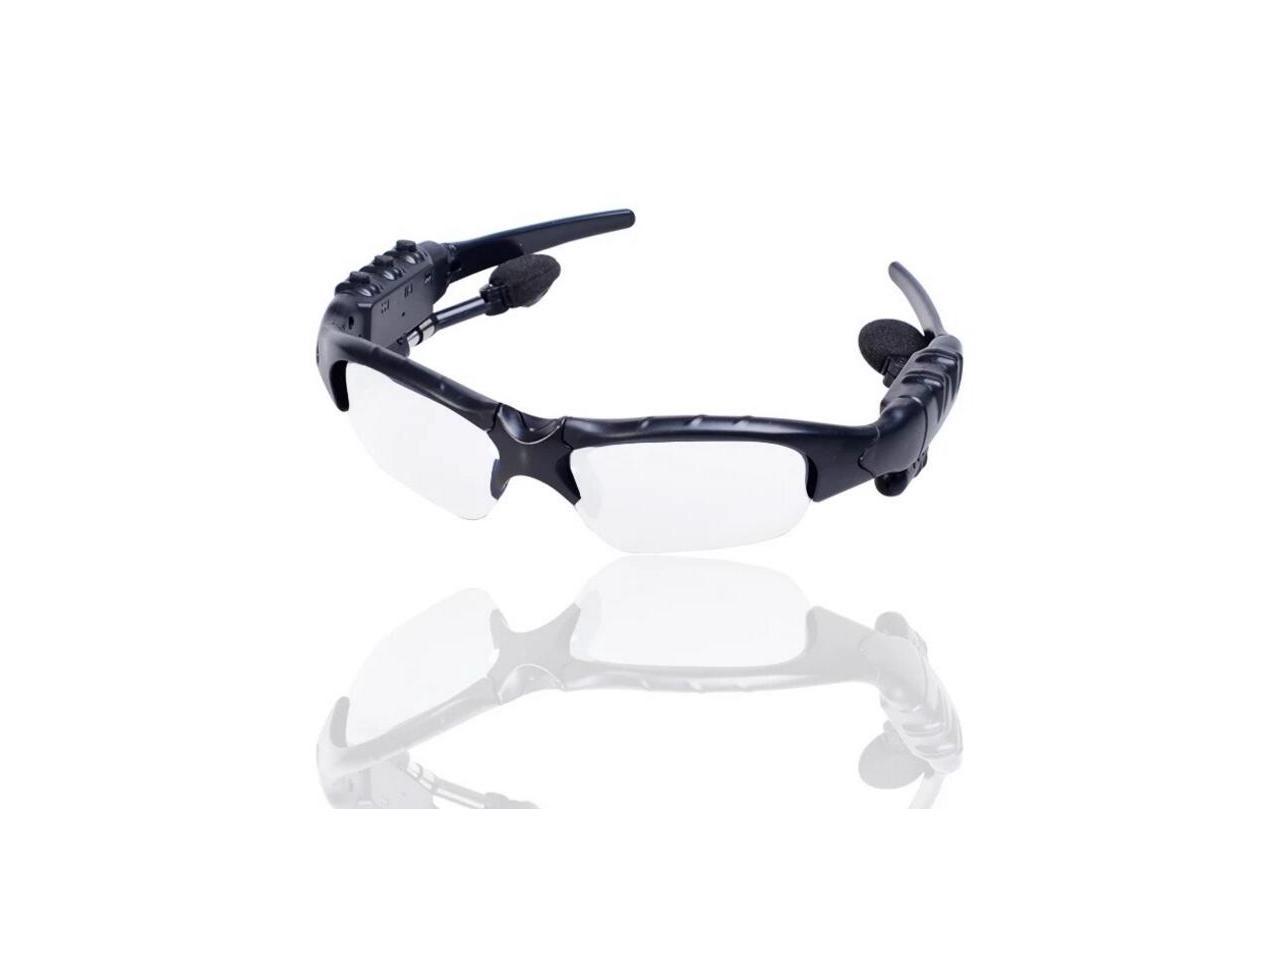 Kingwear Sunglasses Headset Headphone Bluetooth Wireless Music Sunglasses Headsets for iPhone Samsung LG and Smart Phones PC Tablets